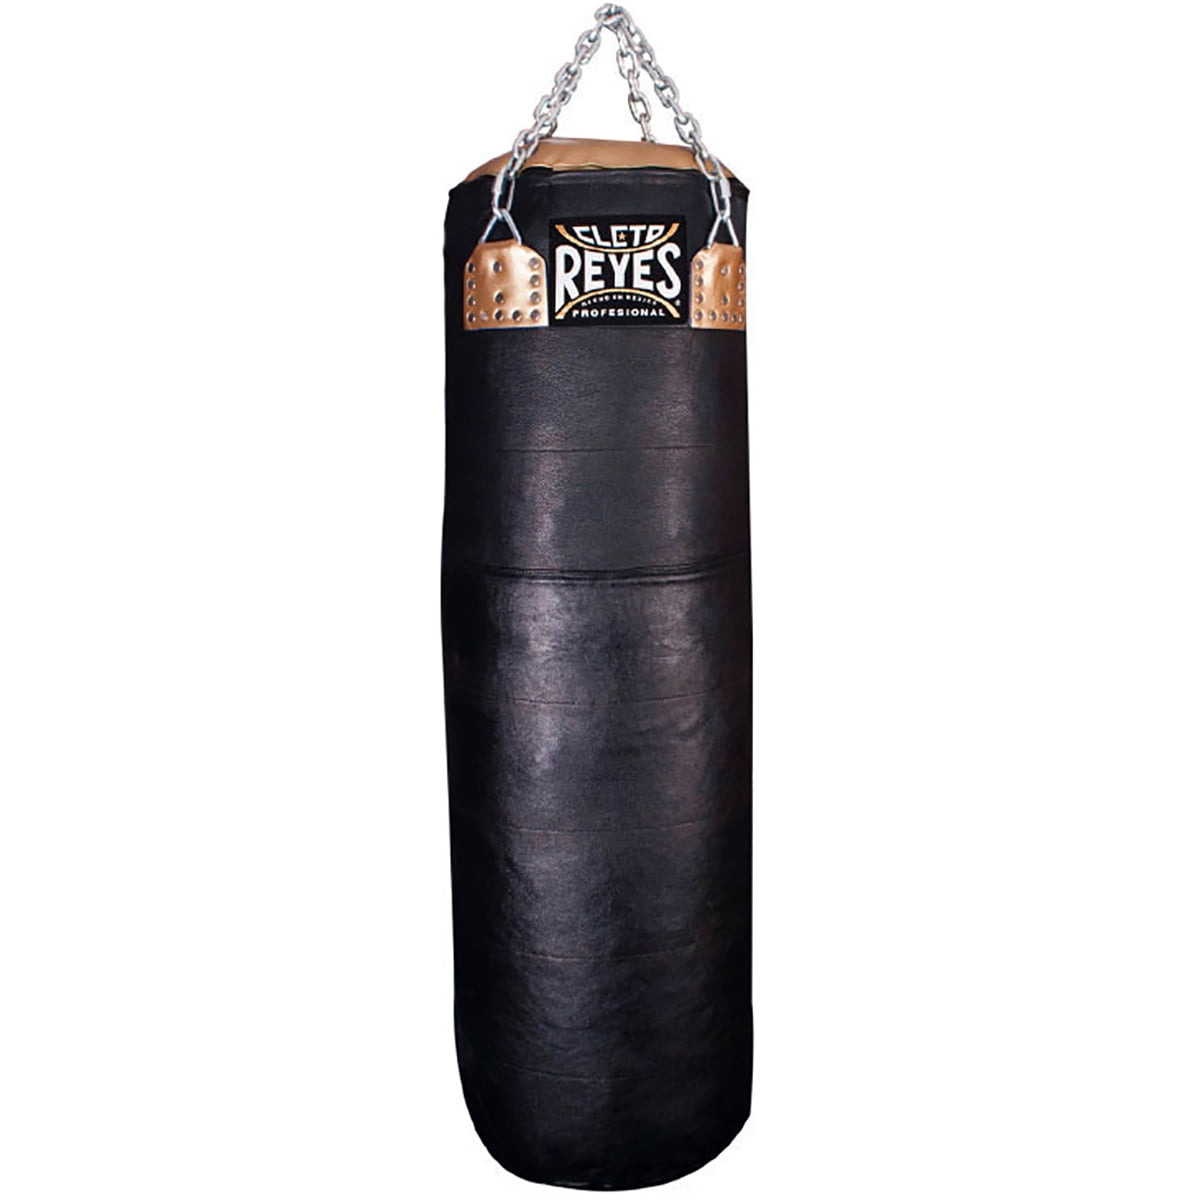 Cleto Reyes Unfilled Leather Extra Heavy Punching Bag - Large - Black - 0 - 0